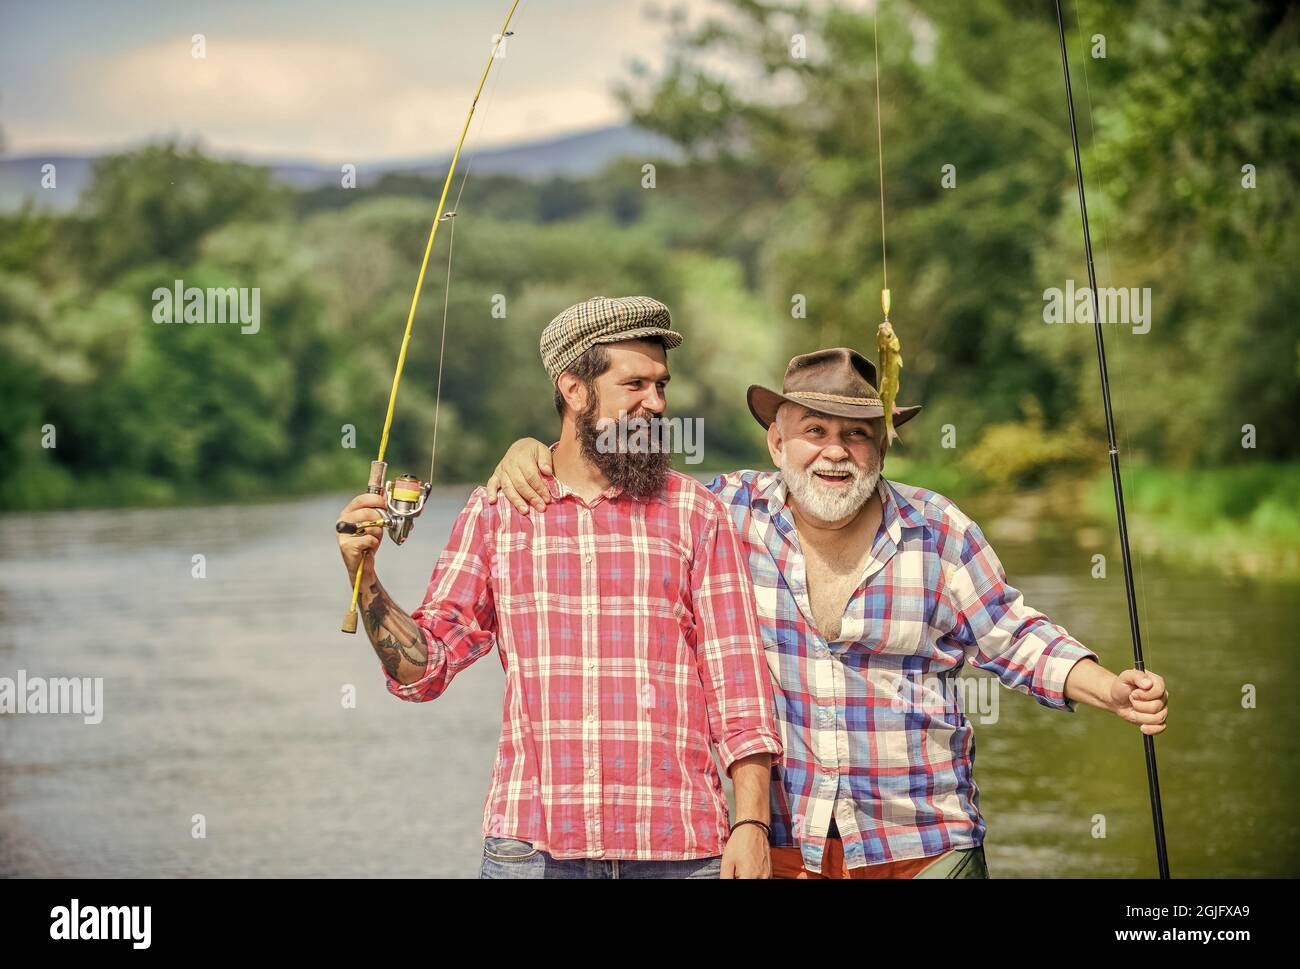 https://c8.alamy.com/comp/2GJFXA9/family-time-activity-and-hobby-fishing-freshwater-lake-pond-river-fisherman-with-fishing-rod-bearded-men-catching-fish-mature-man-with-friend-fis-2GJFXA9.jpg